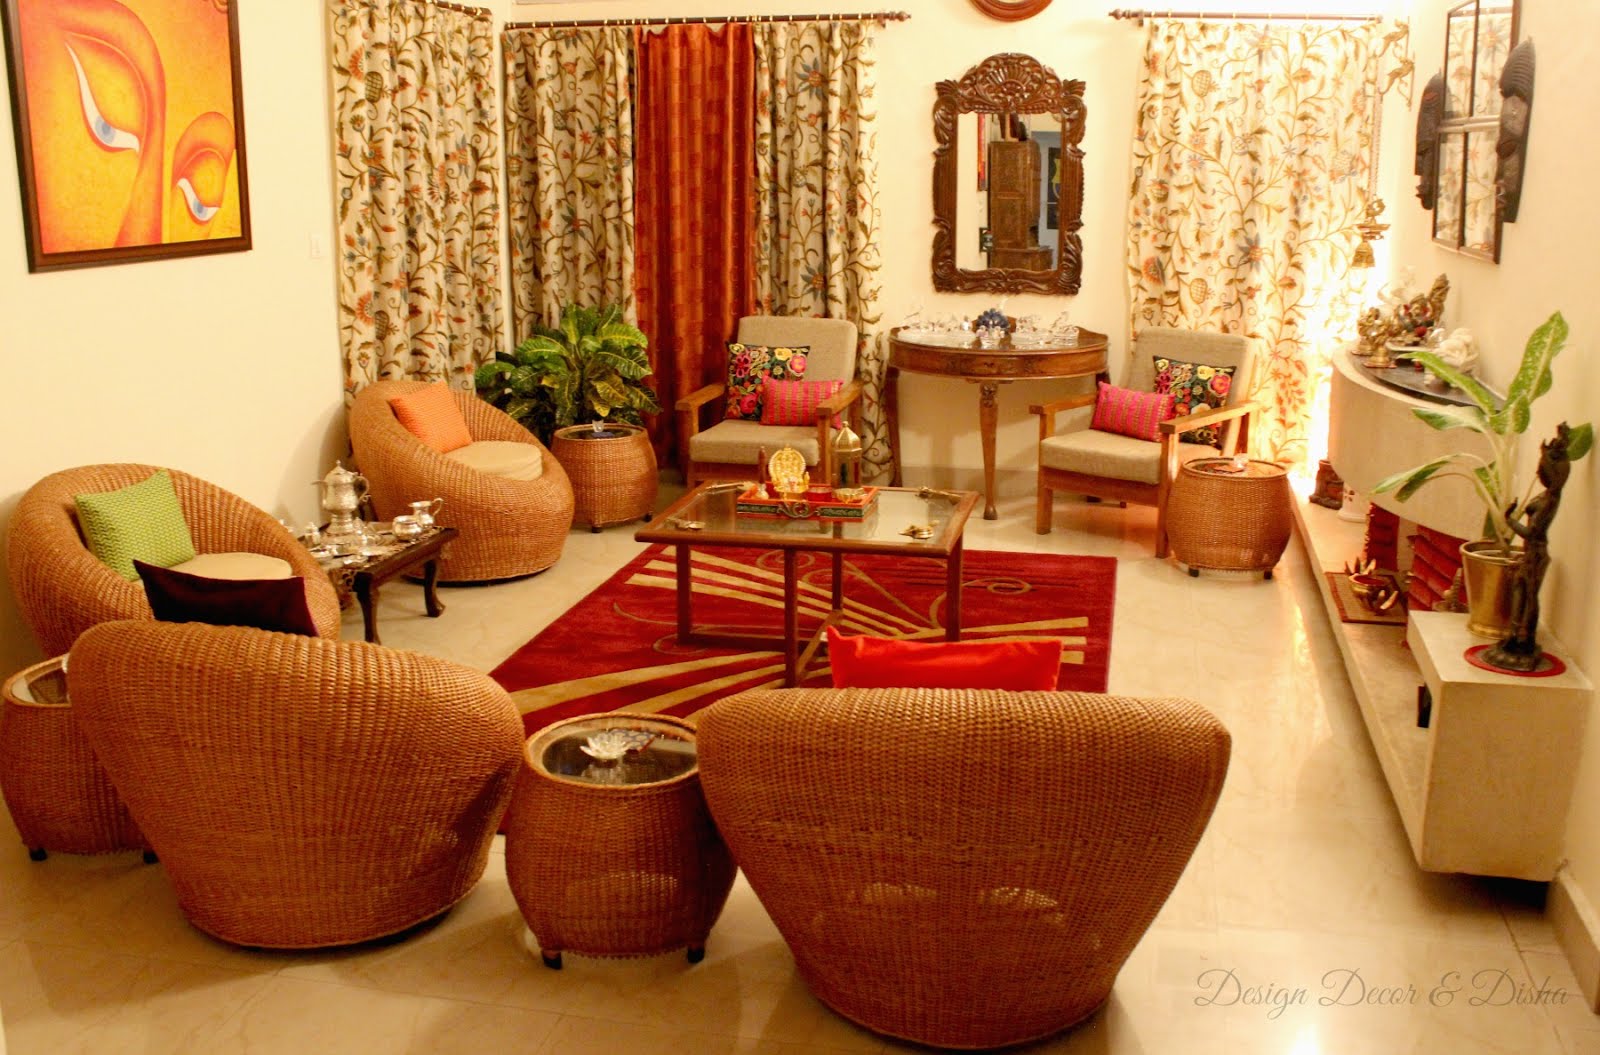  Design  Decor  Disha An Indian  Design  Decor  Blog Home  